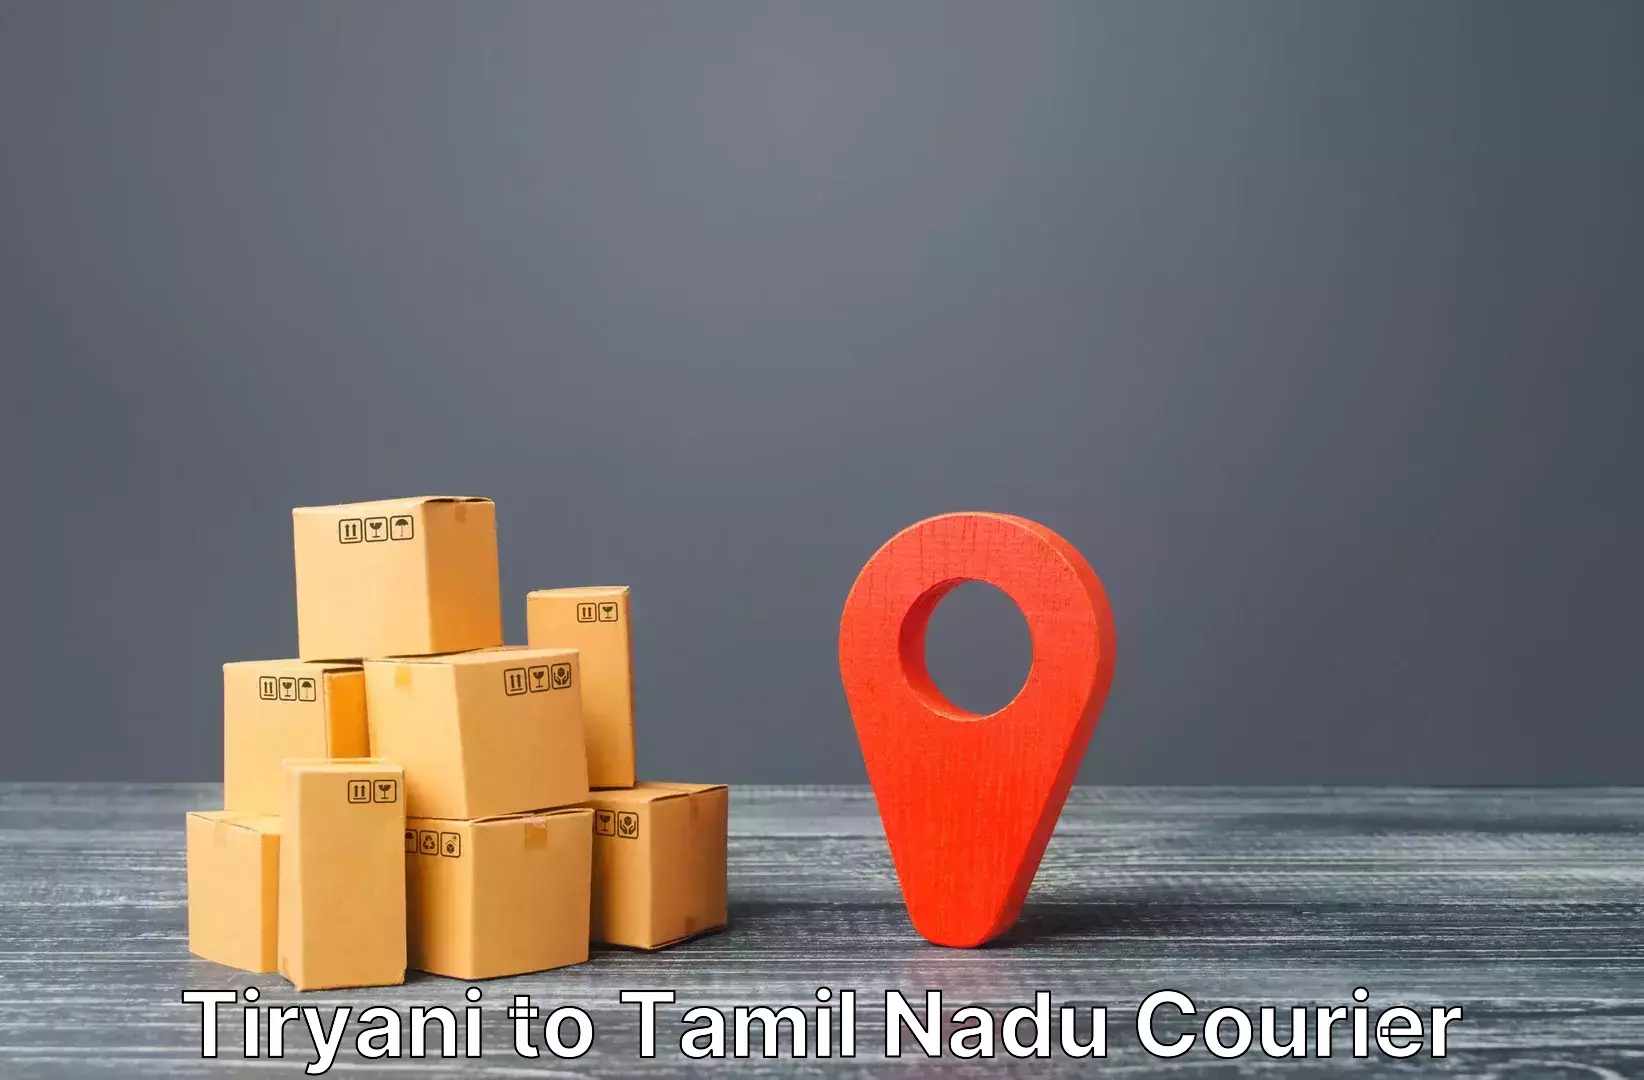 Luggage delivery providers Tiryani to Tamil Nadu